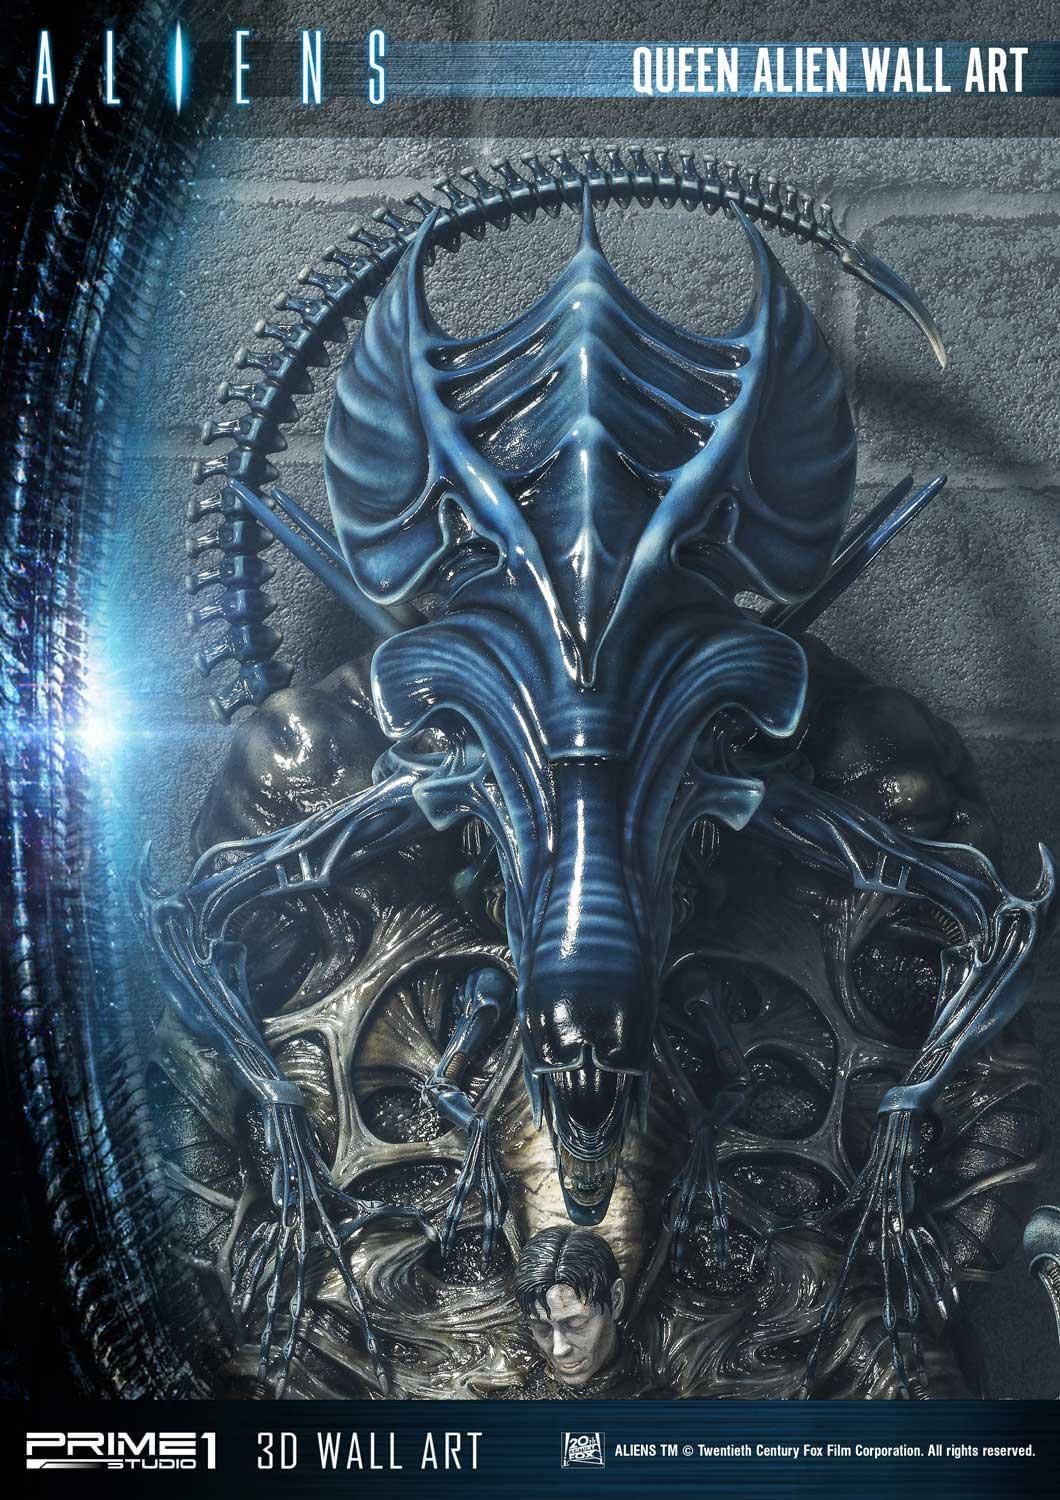 Alien Queen Wall Art Unveiled by Prime 1 Studio